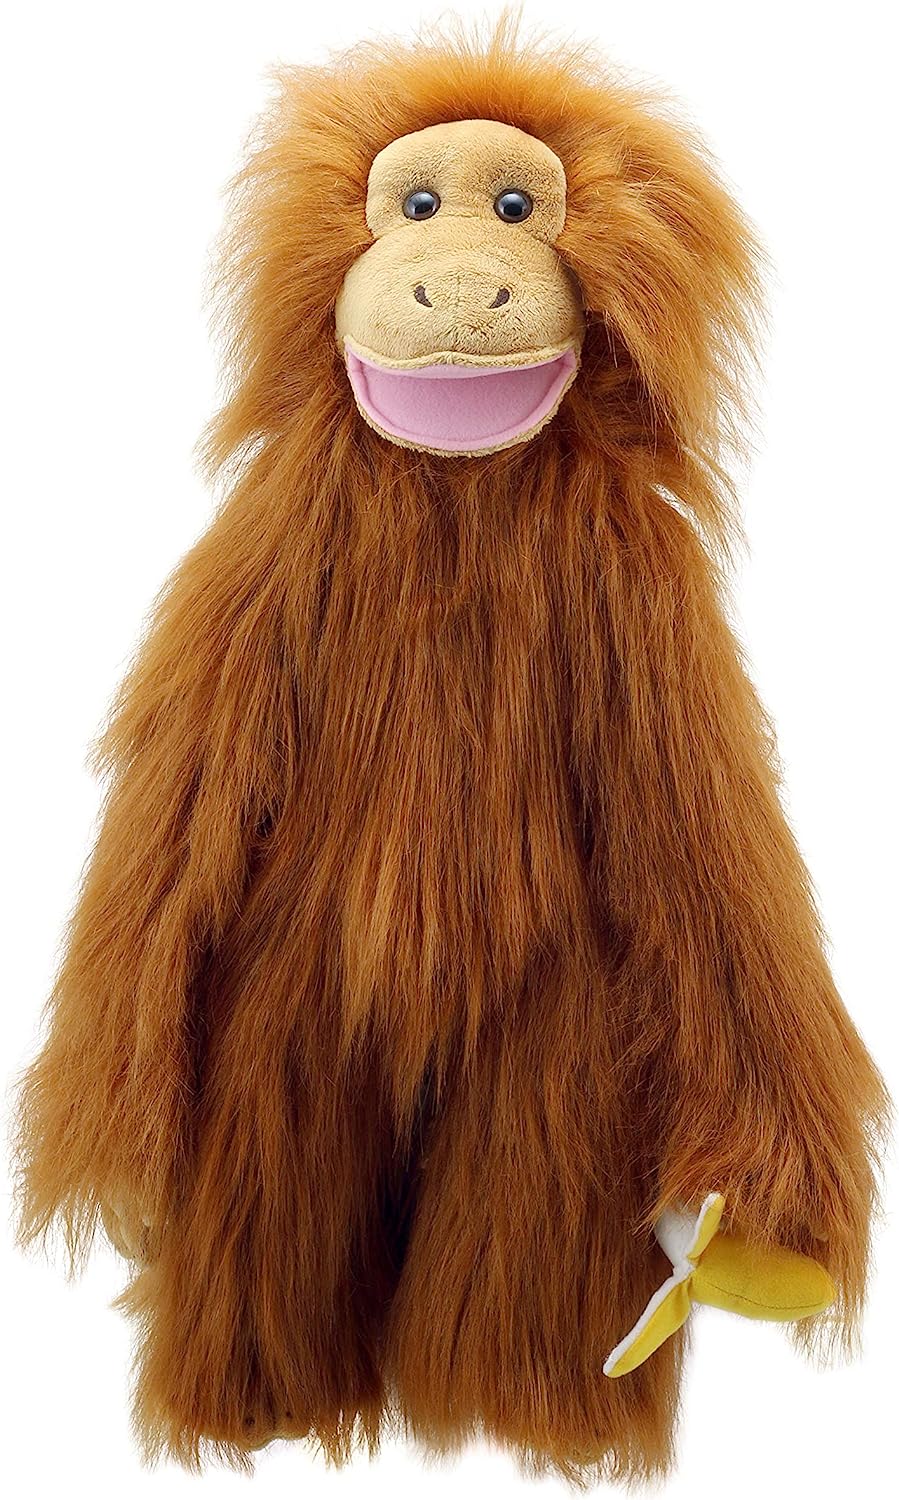 The Puppet Company  Primates  Orangutan Medium The Bubble Room Toy Store Dublin